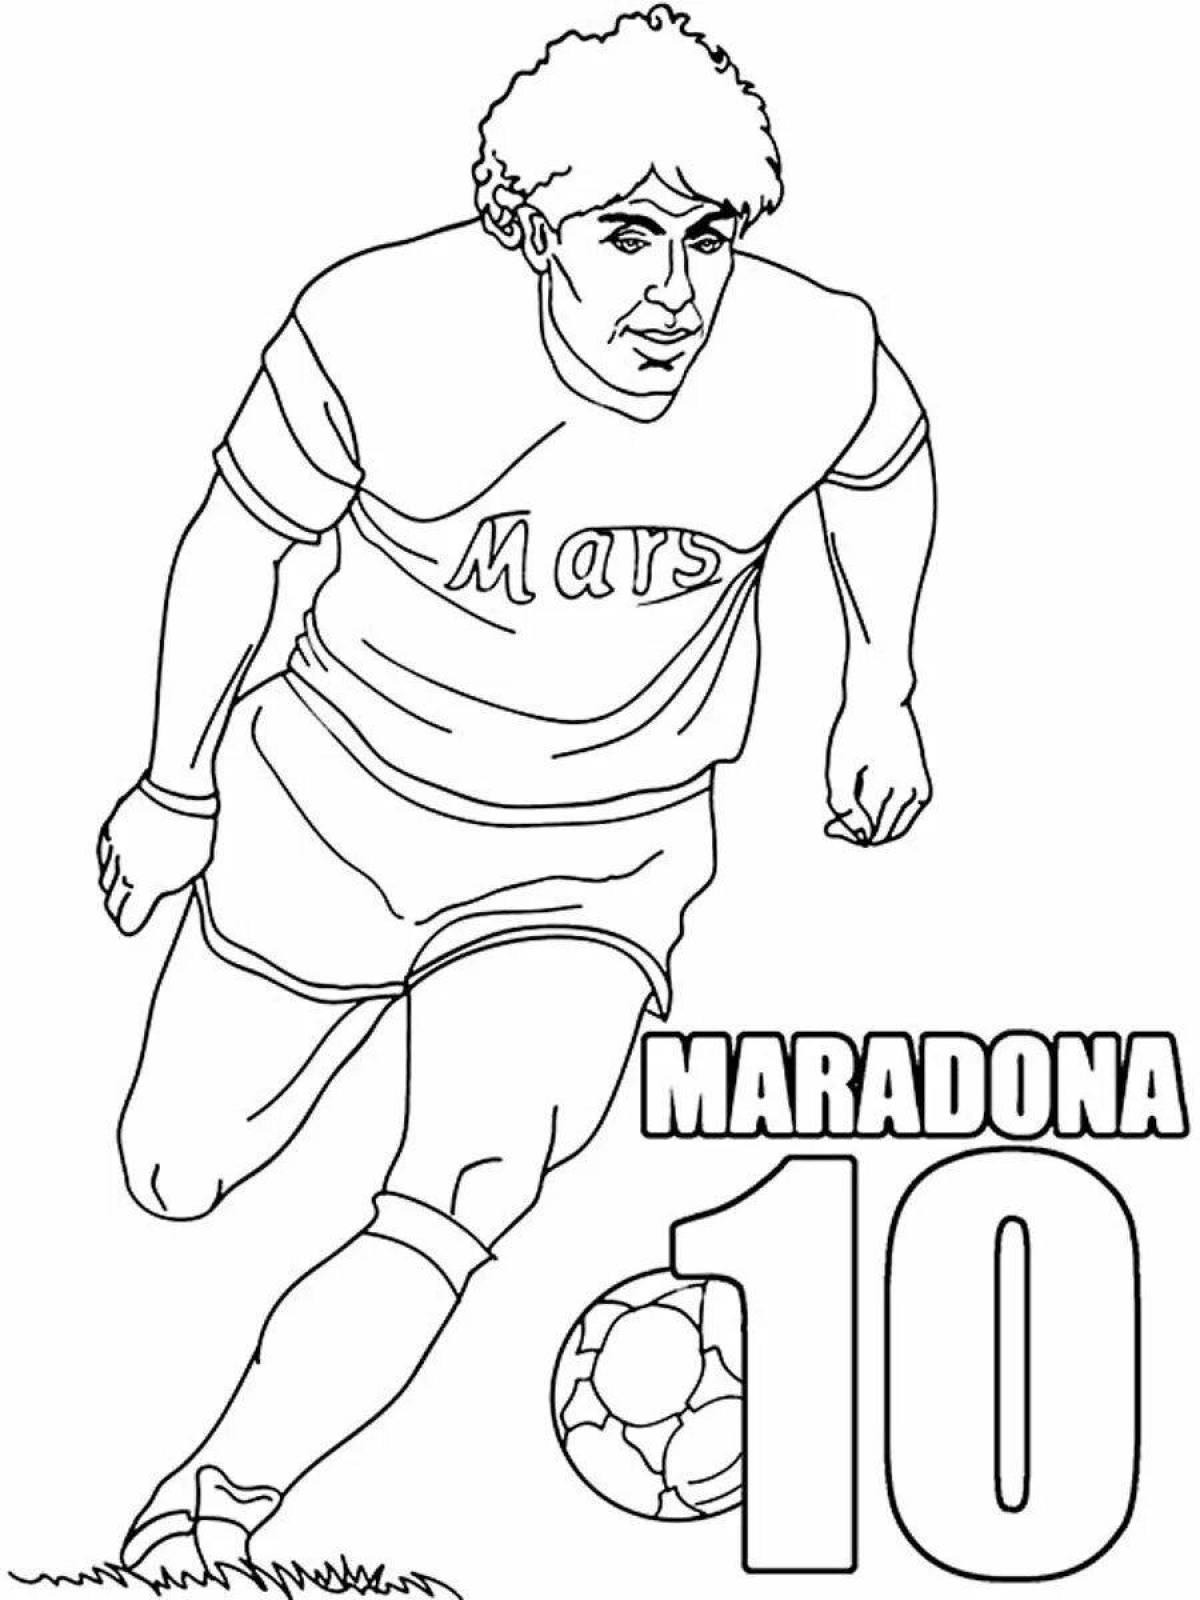 Maradona style coloring book